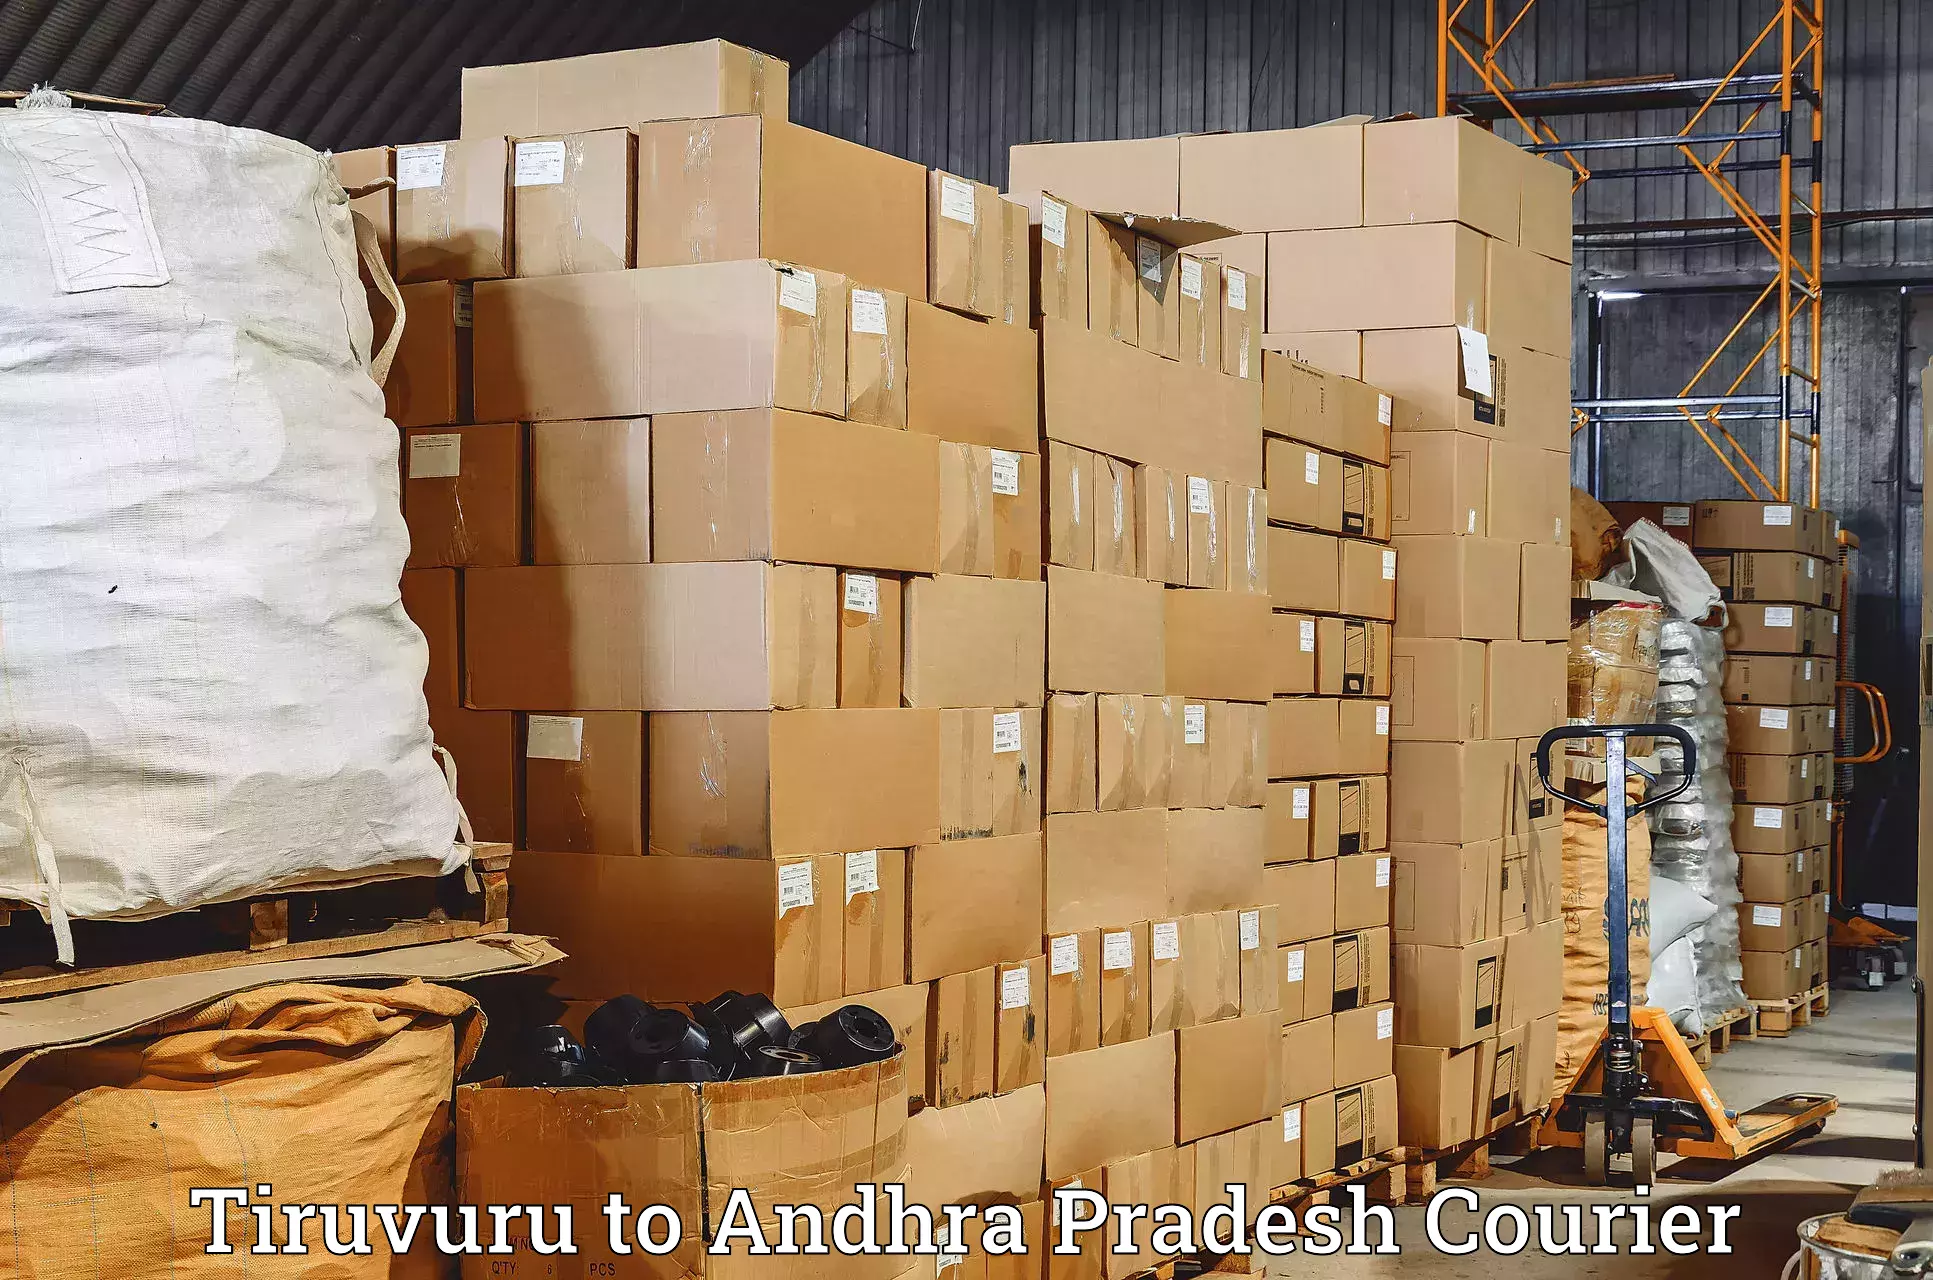 Express mail service in Tiruvuru to Andhra Pradesh